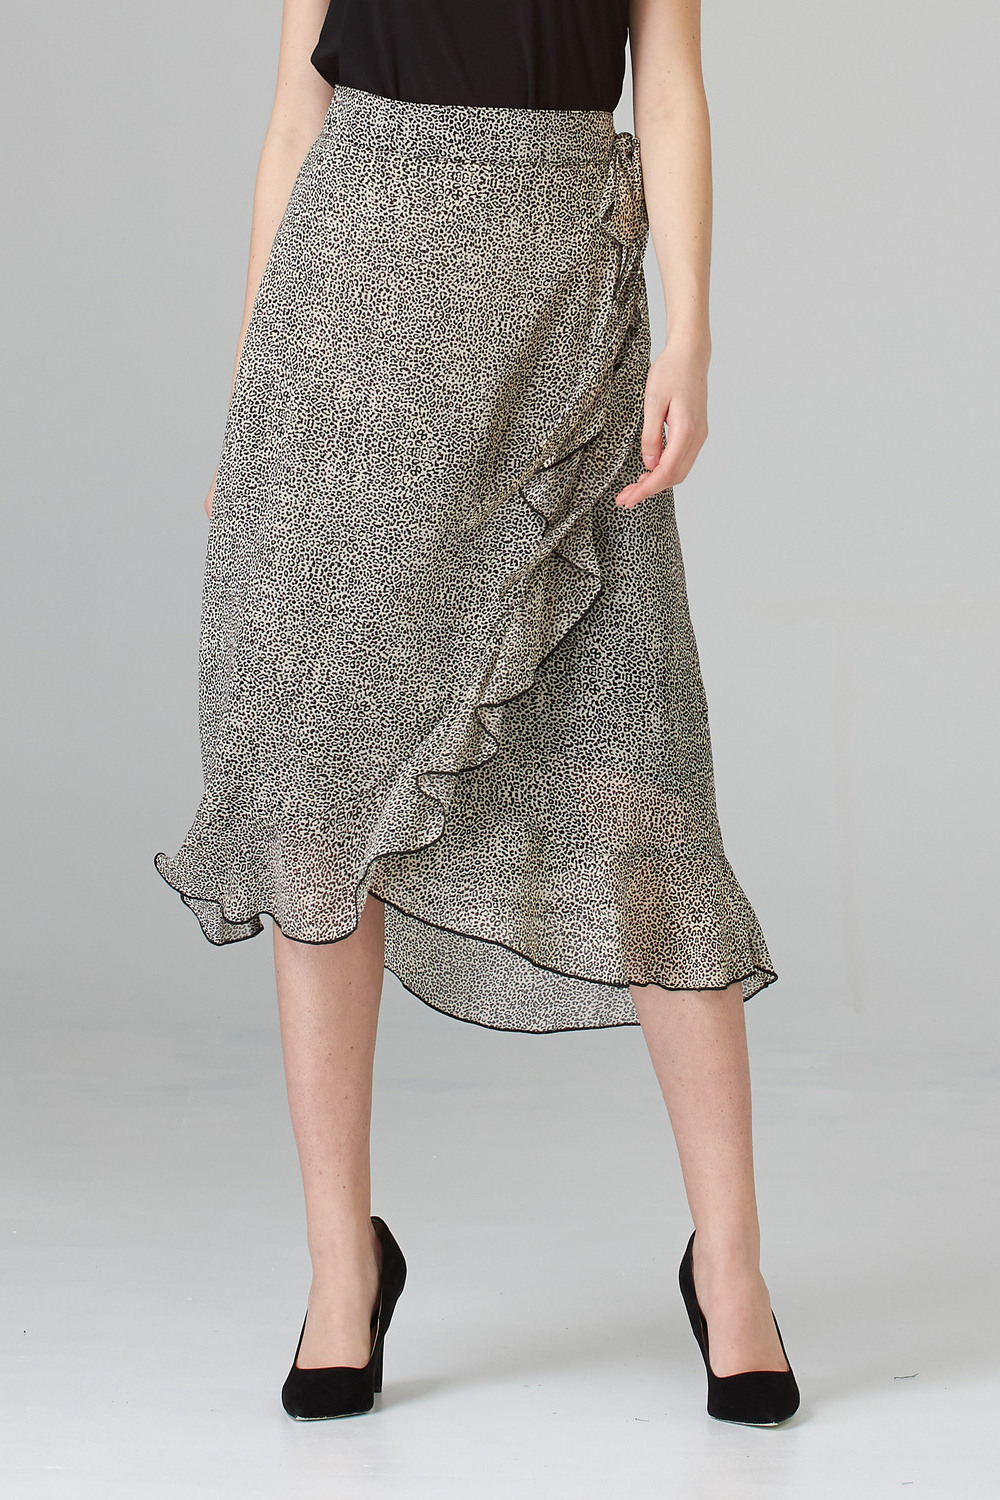 Joseph Ribkoff Skirt Style 202108. Beige/black